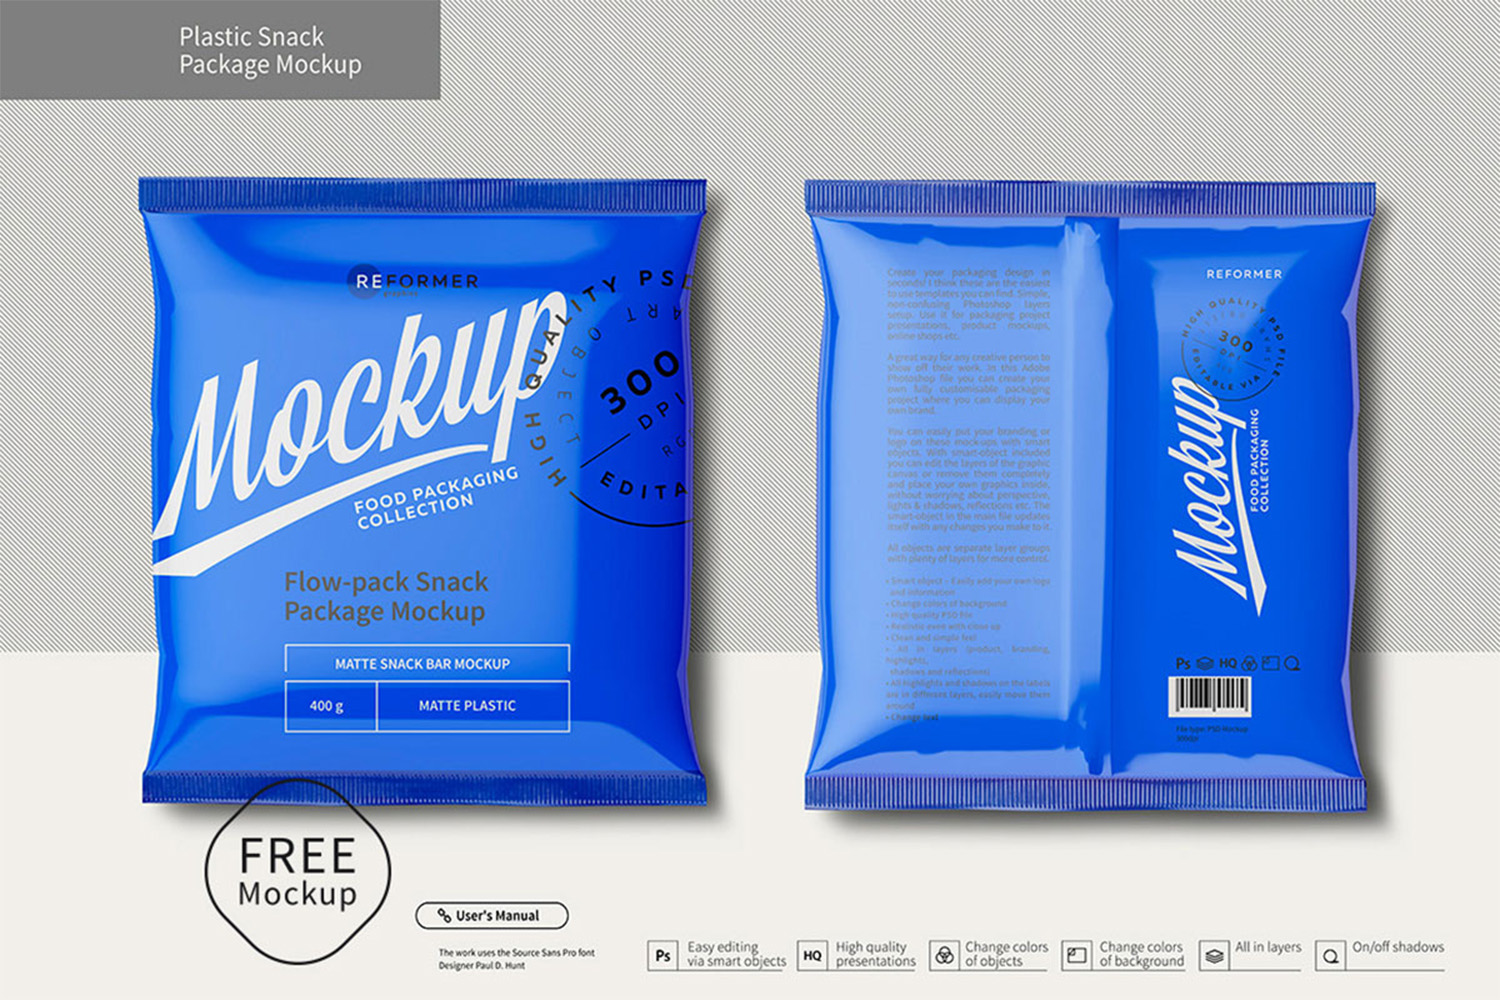 Plastic Snack Package Mockup Free Download